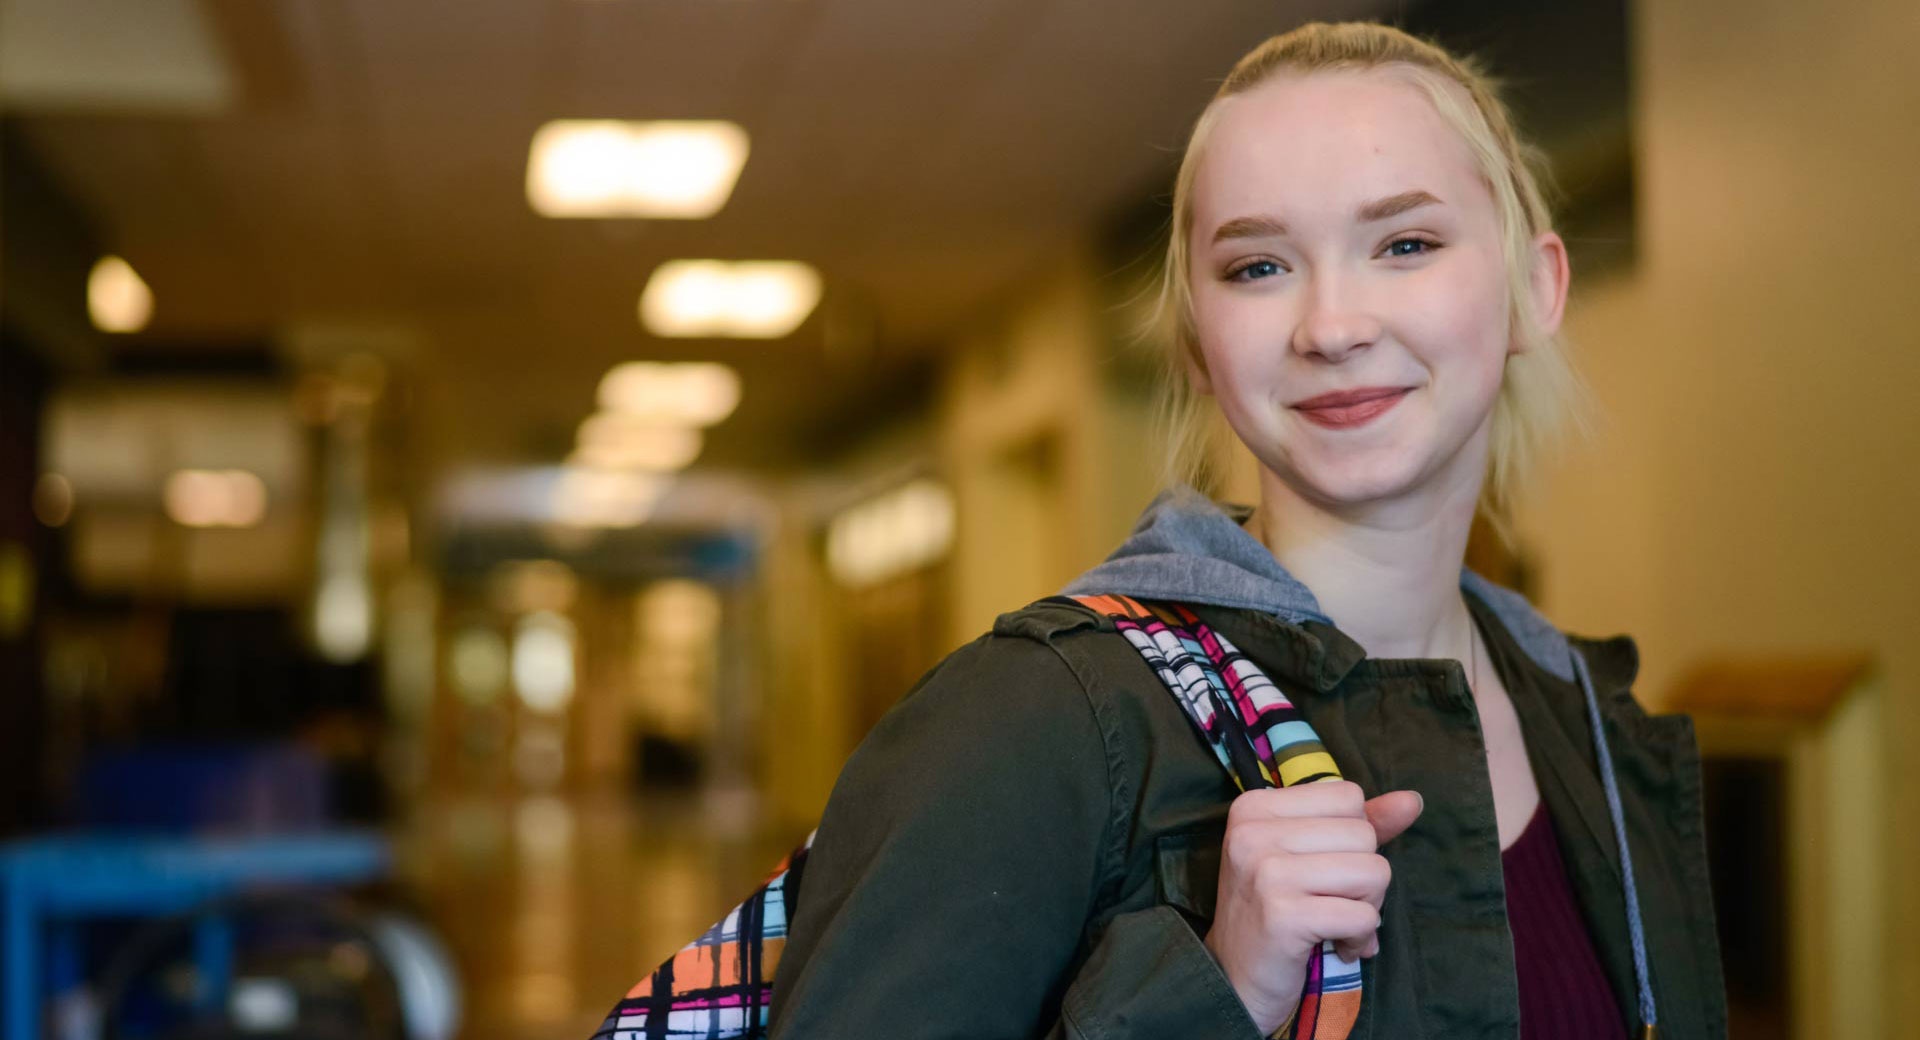 Smiling teenager in high school hallway